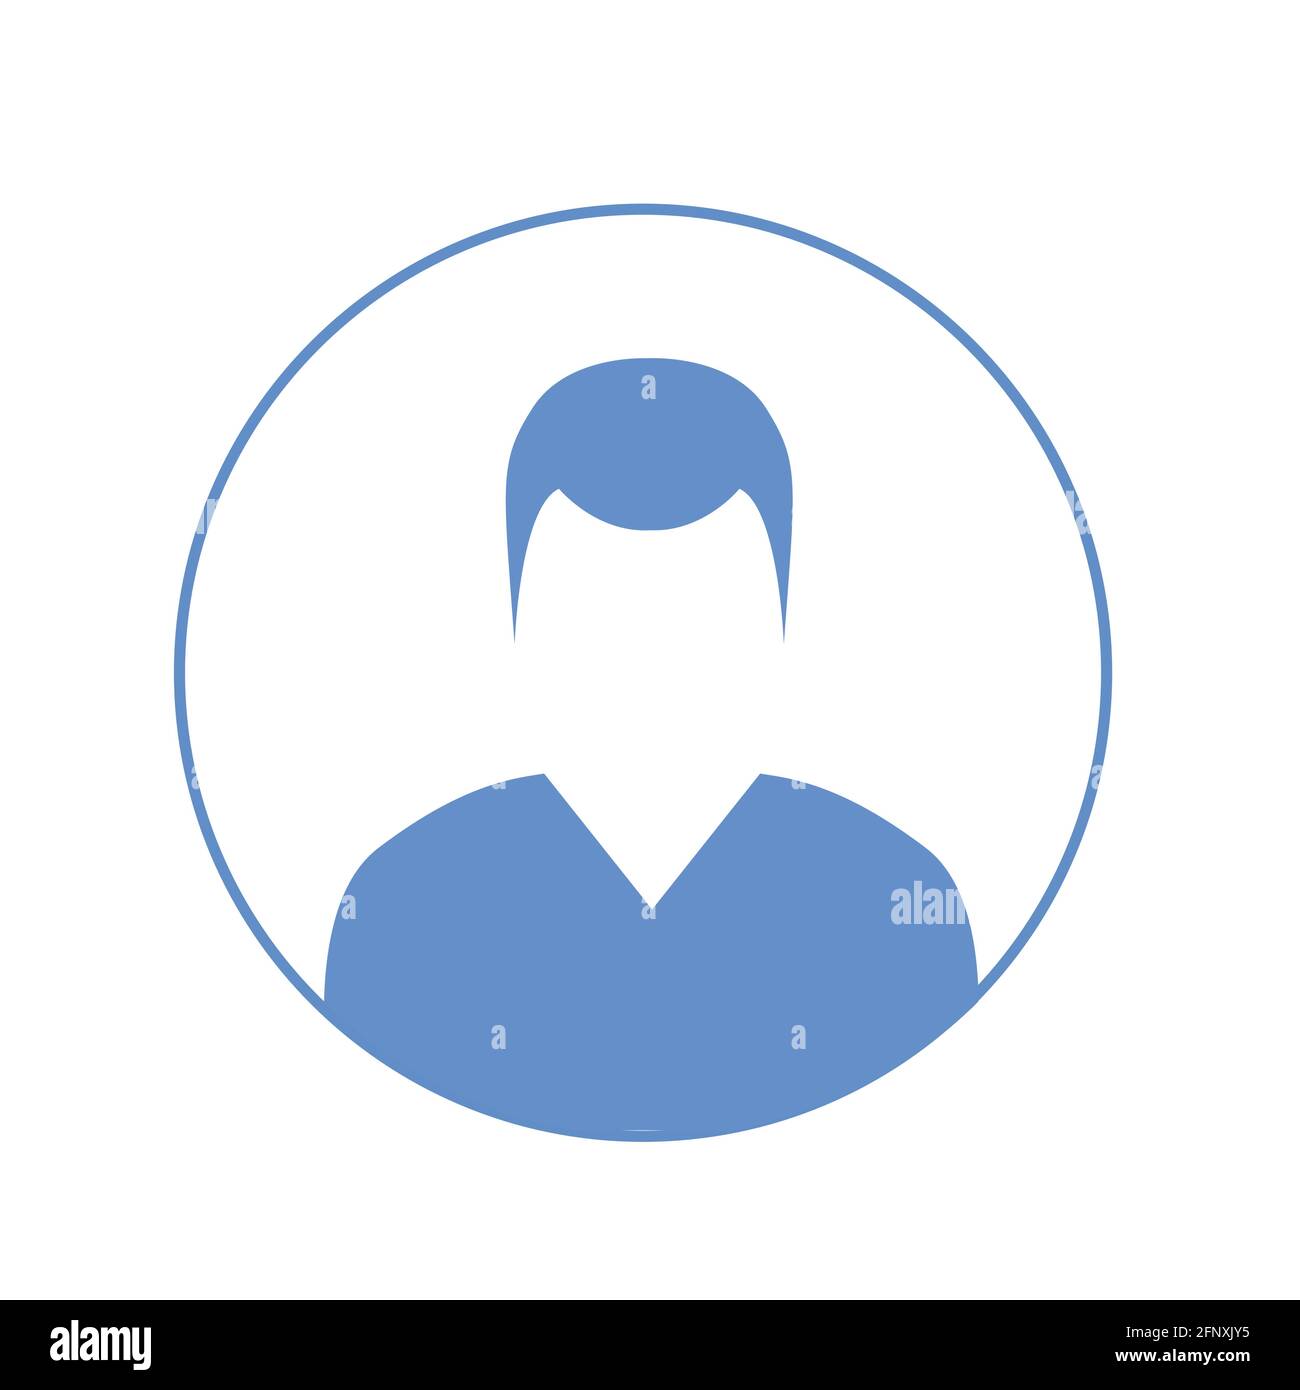 Man, user, profile, Avatar icon